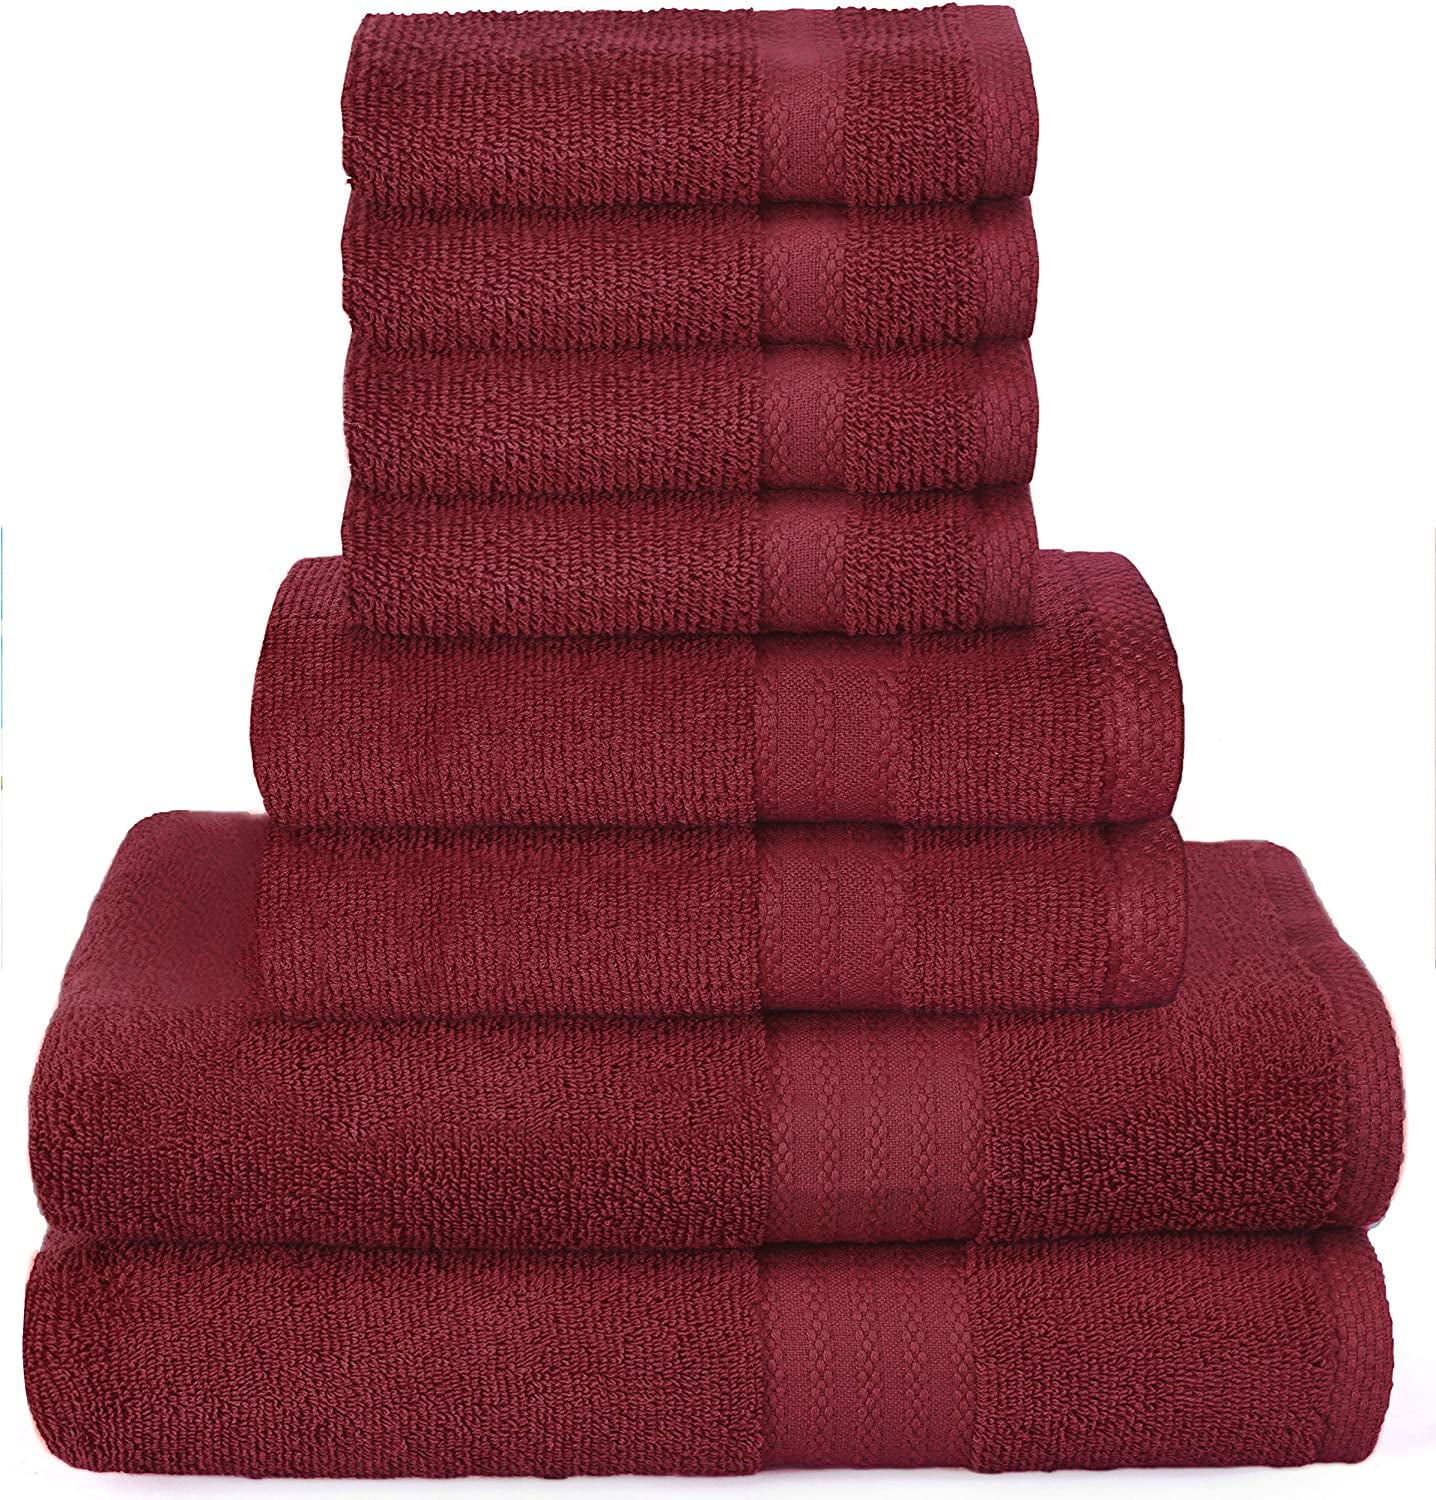 Monarch Brands True Colors 16 x 27 100% Ring Spun Cotton Burgundy Hand  Towel 3 lb. - 12/Pack